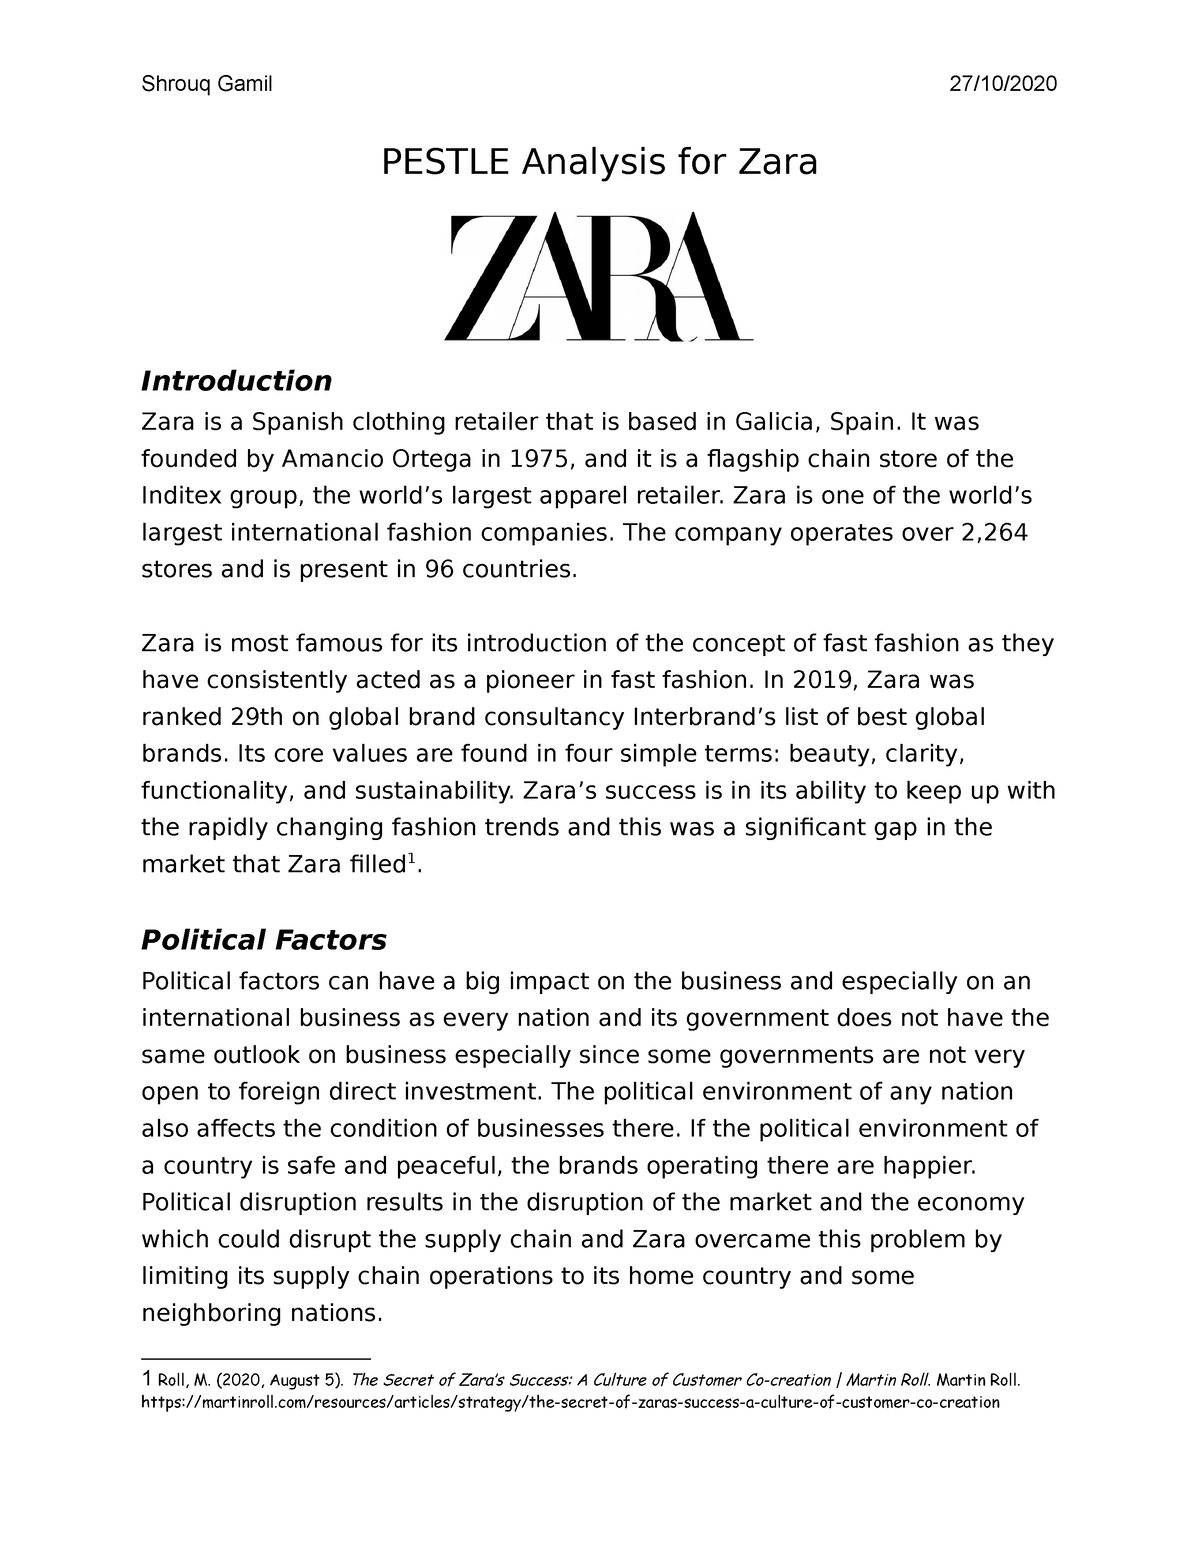 zara case study summary